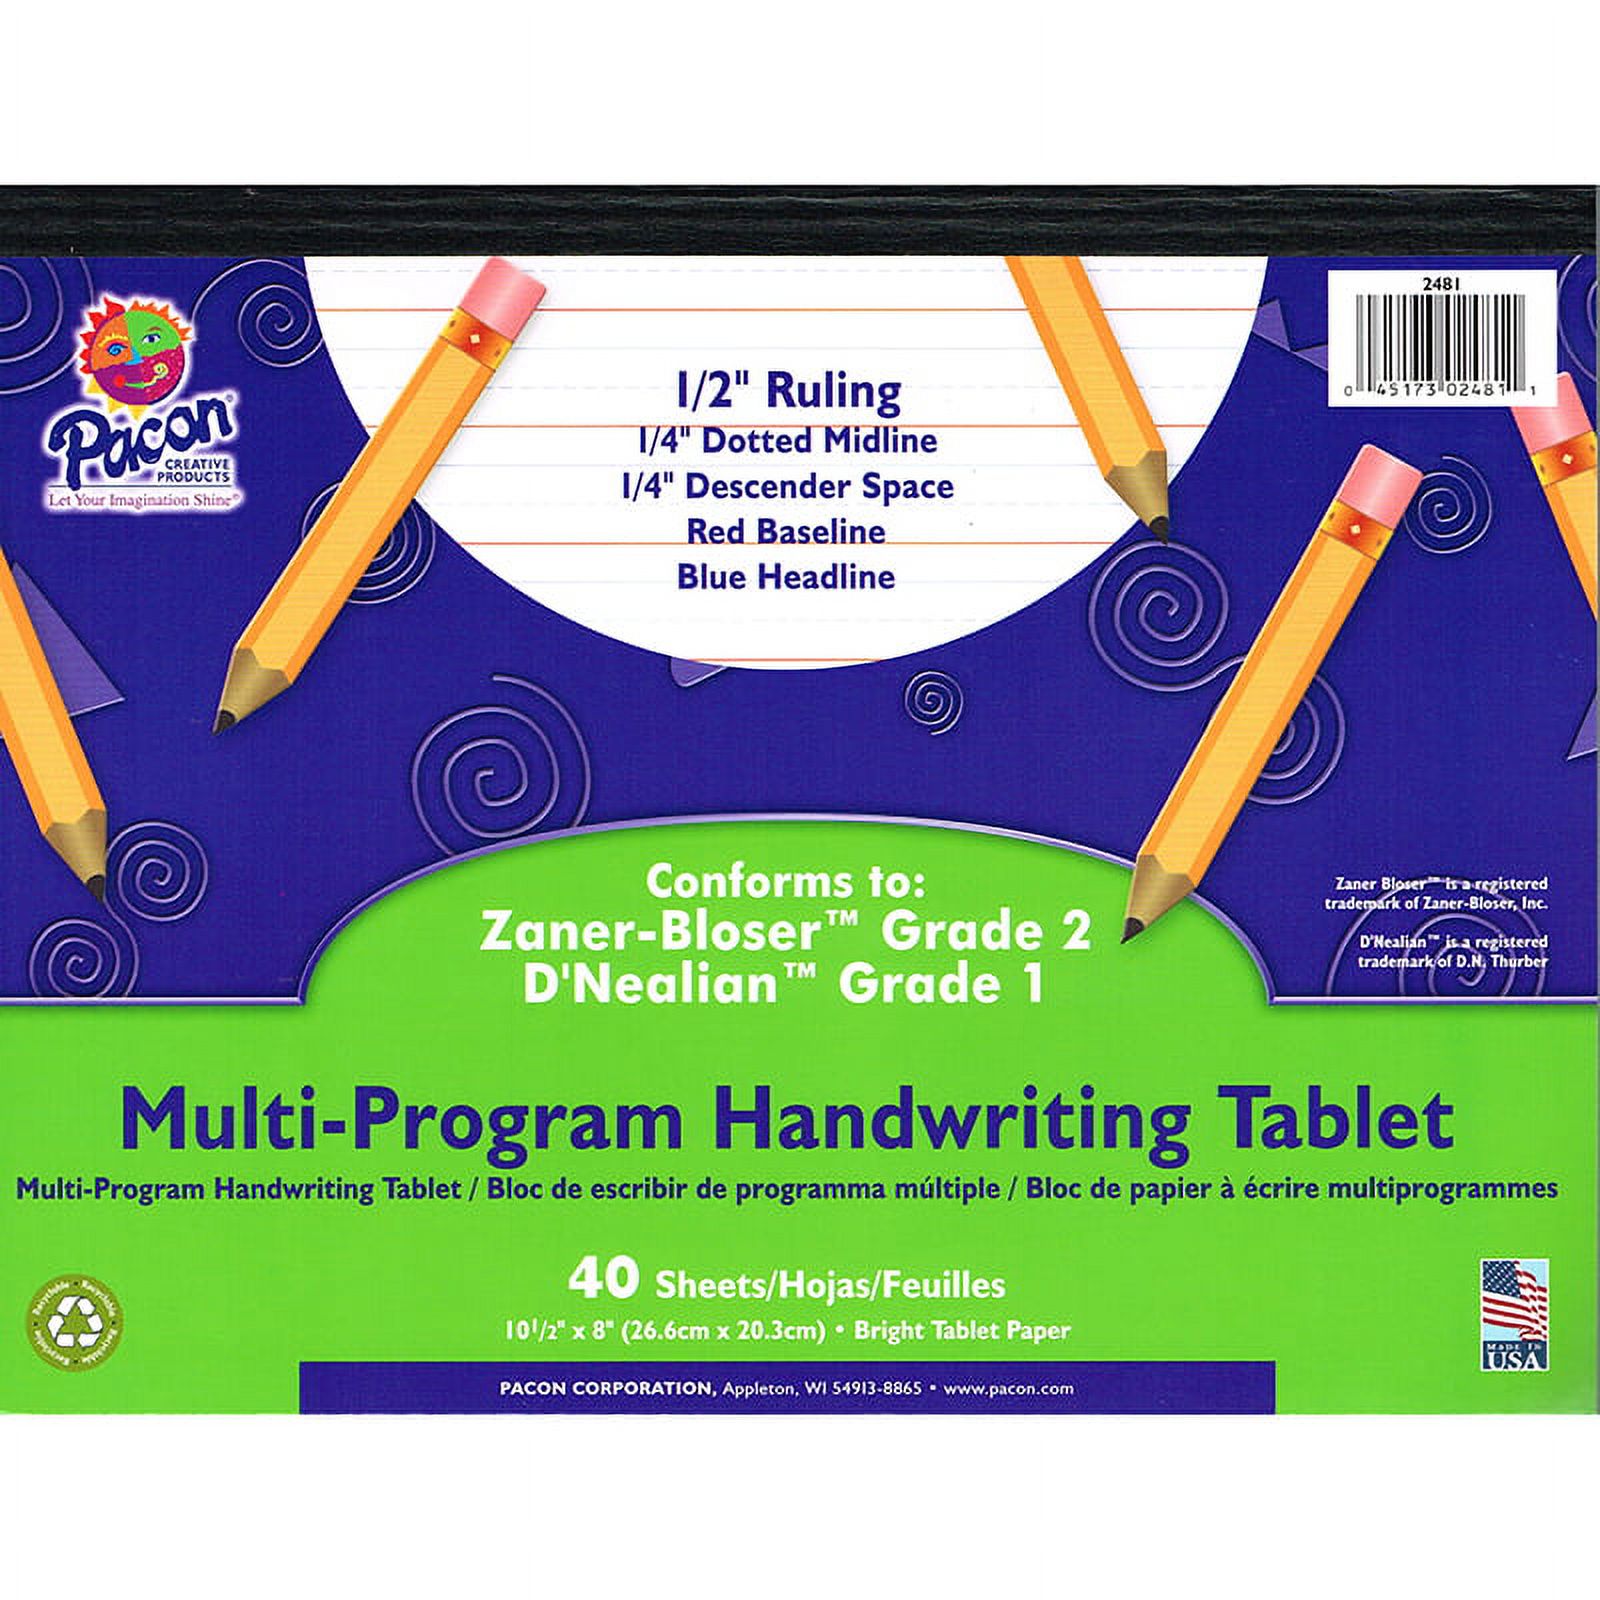 Multi-Program Handwriting Tablet, D'Nealian/Zaner-Bloser, 1/2" x 1/4" x 1/4" Ruled Long, 10-1/2" x 8", 40 Sheets | Bundle of 10 Each - image 1 of 1